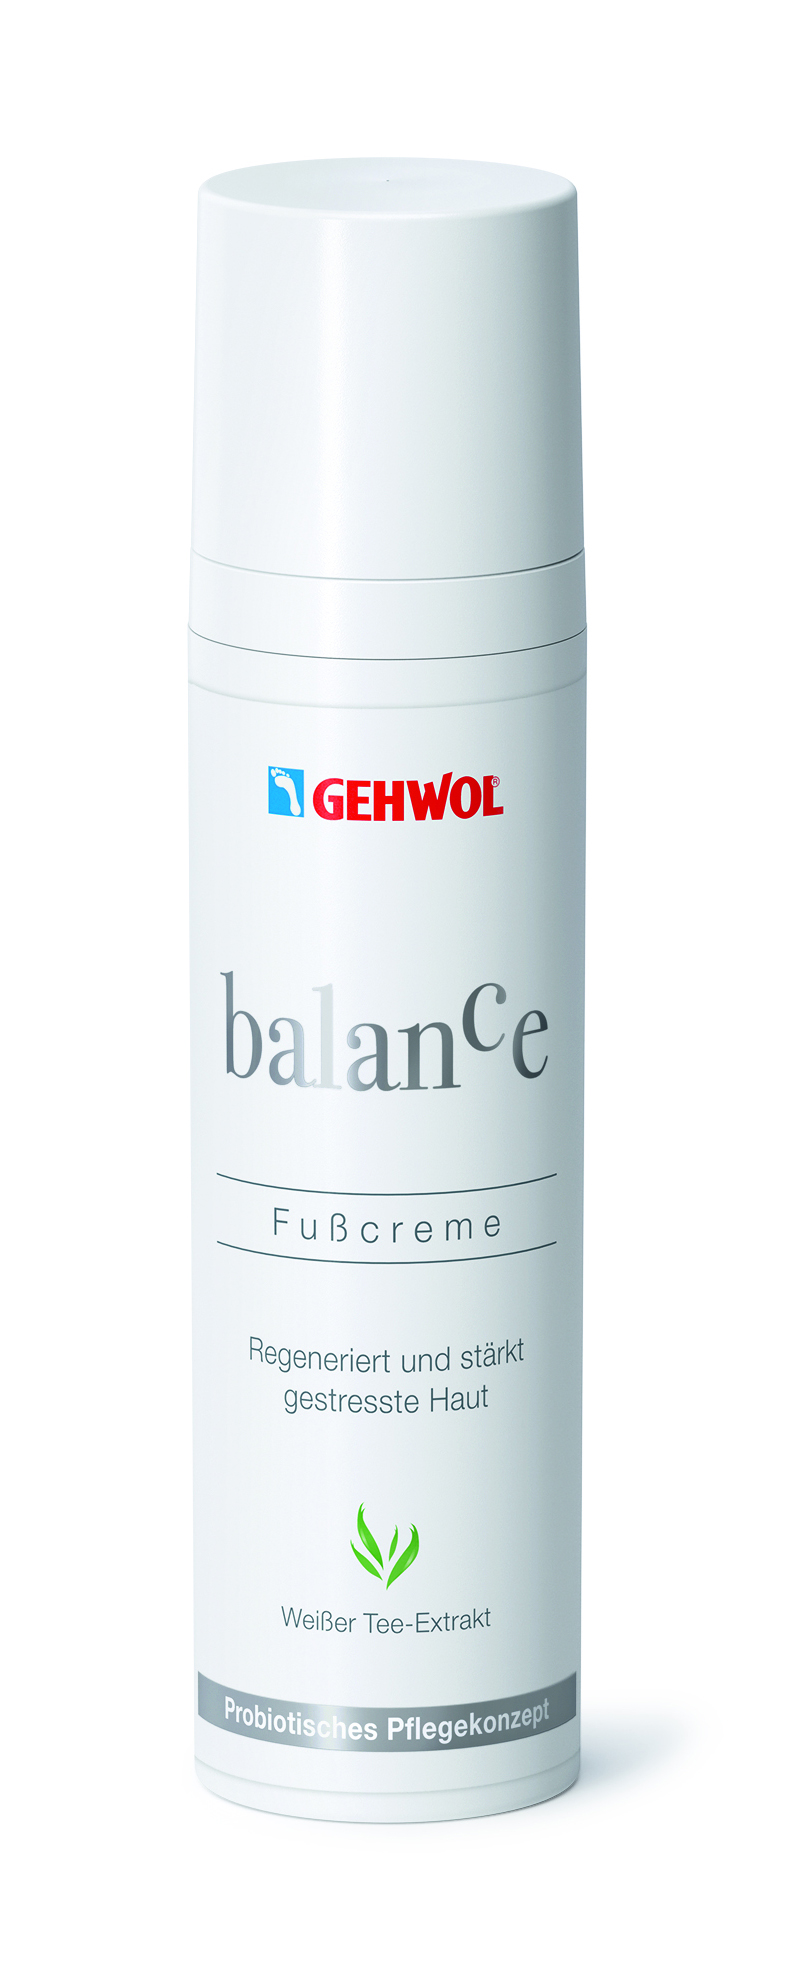 GEHWOL balance Fusscreme, 75 ml Spender